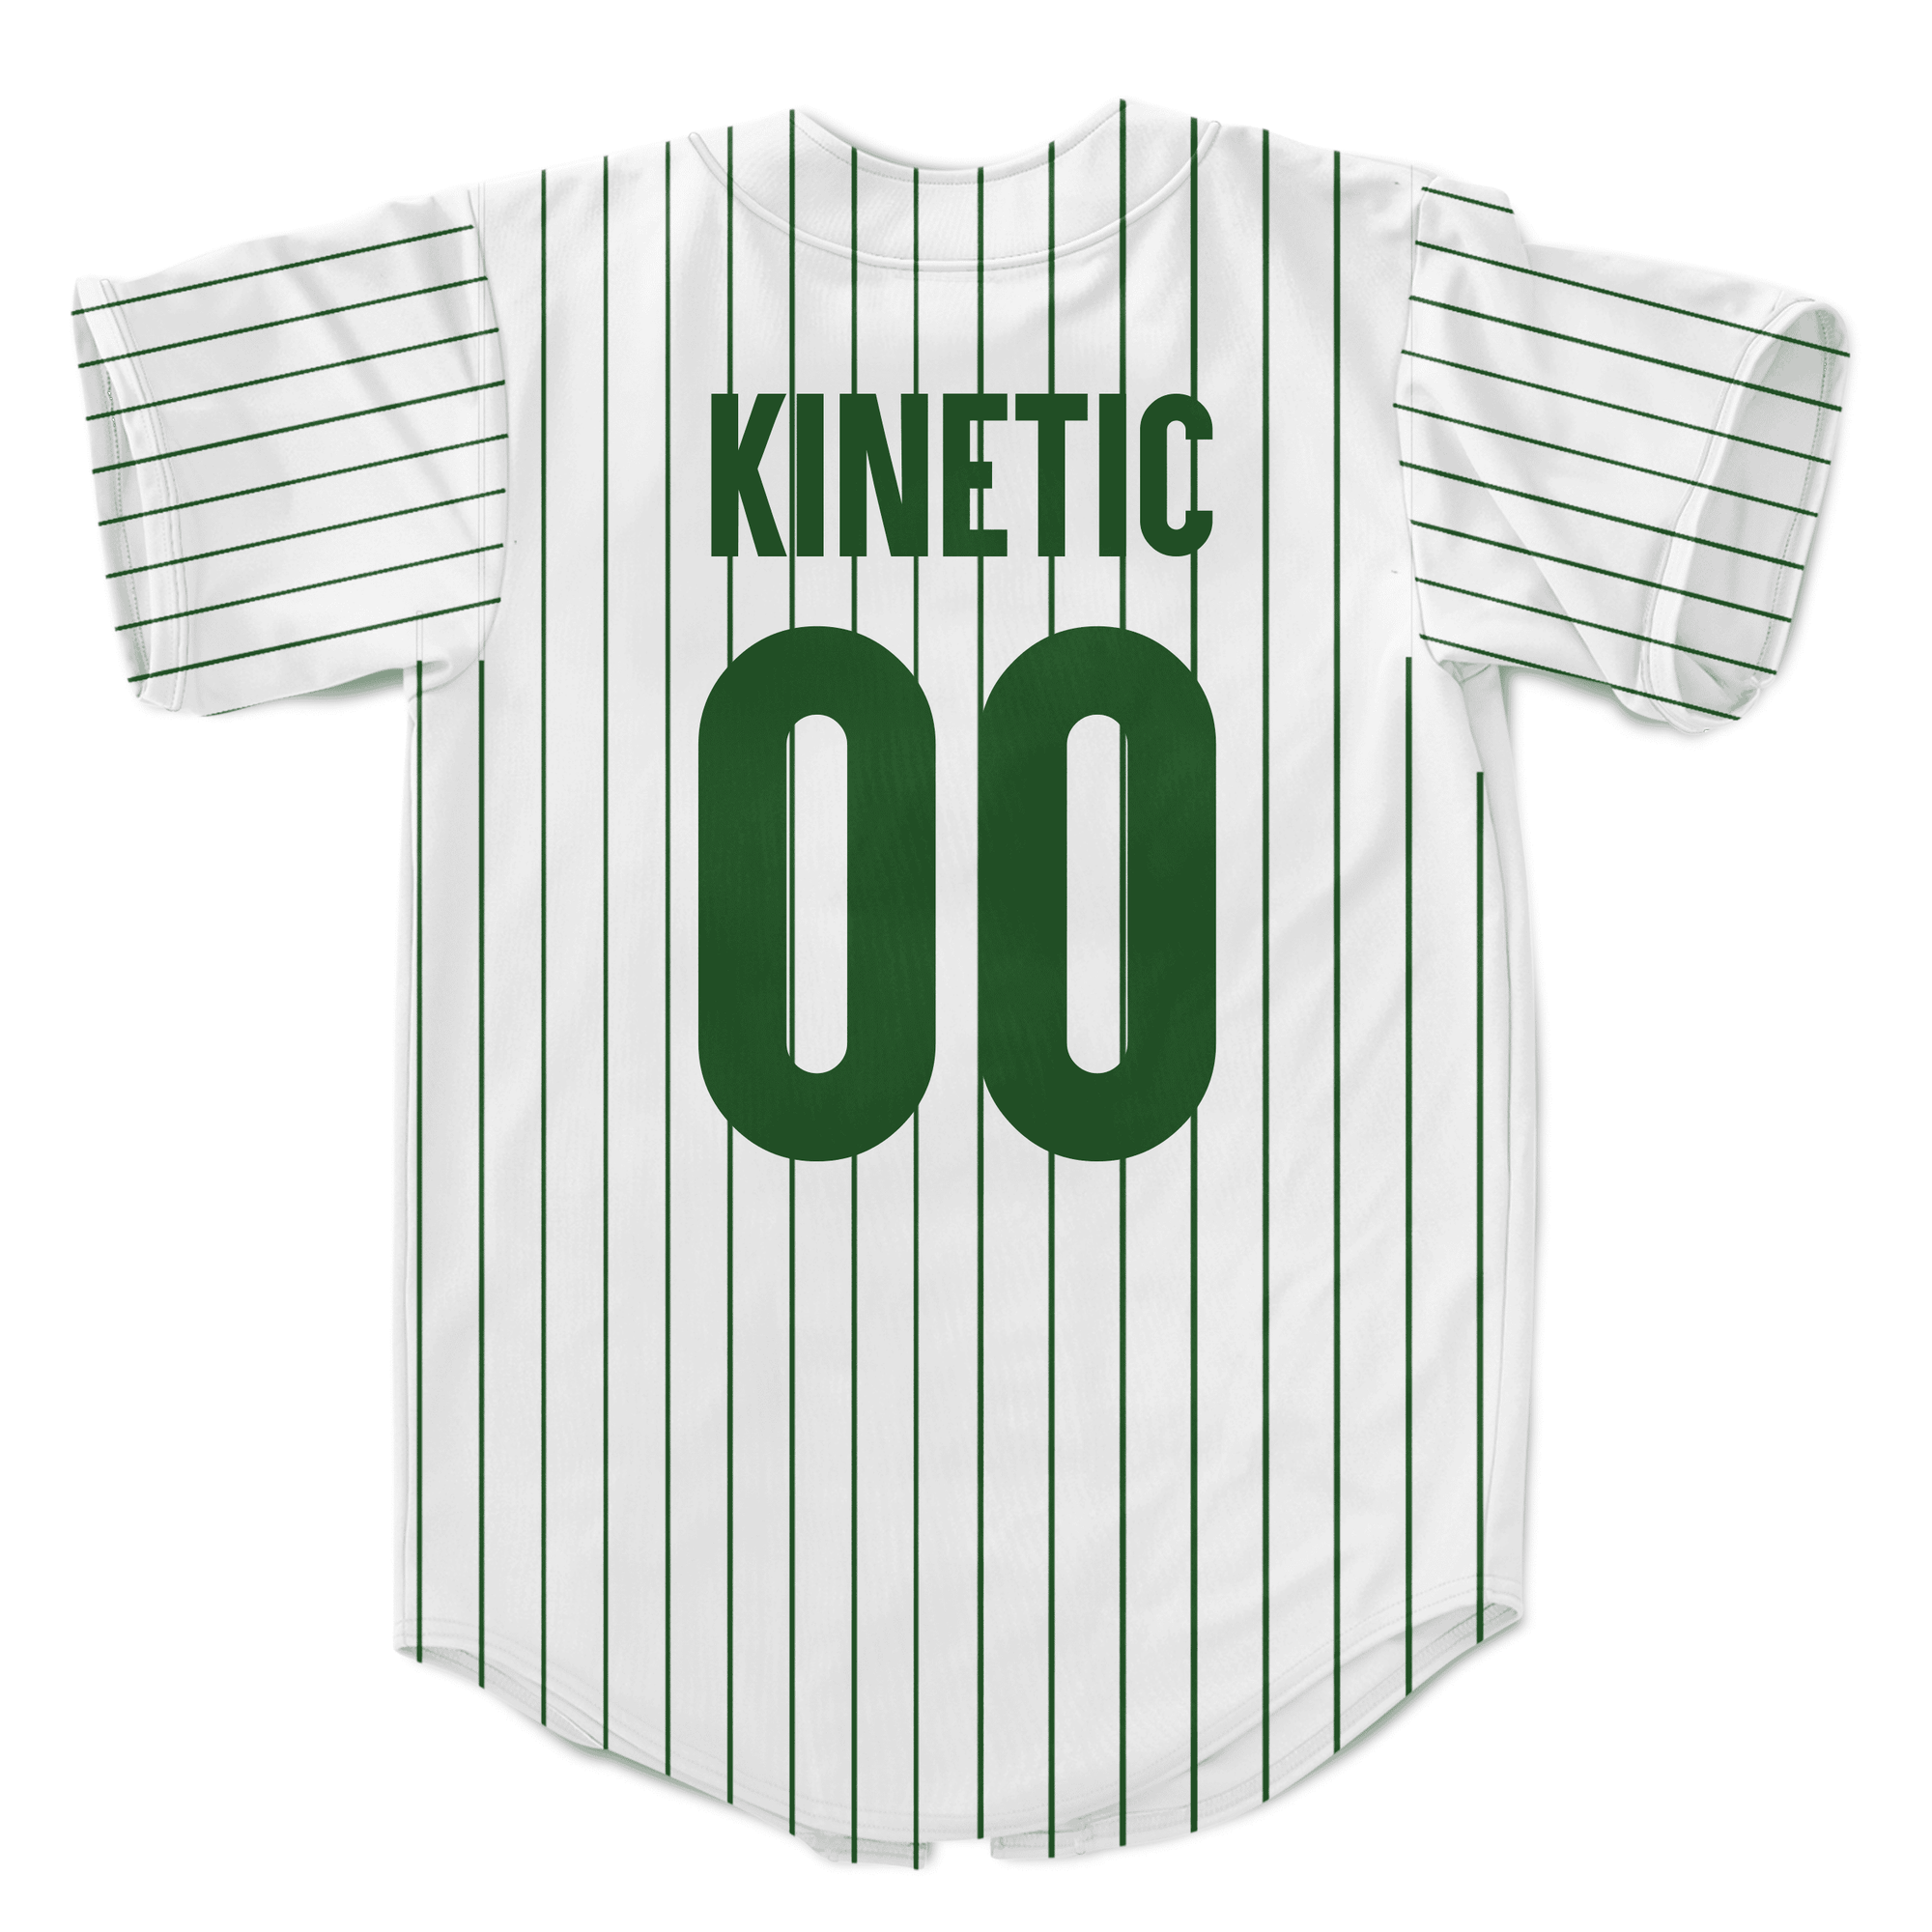 Delta Chi - Green Pinstripe Baseball Jersey